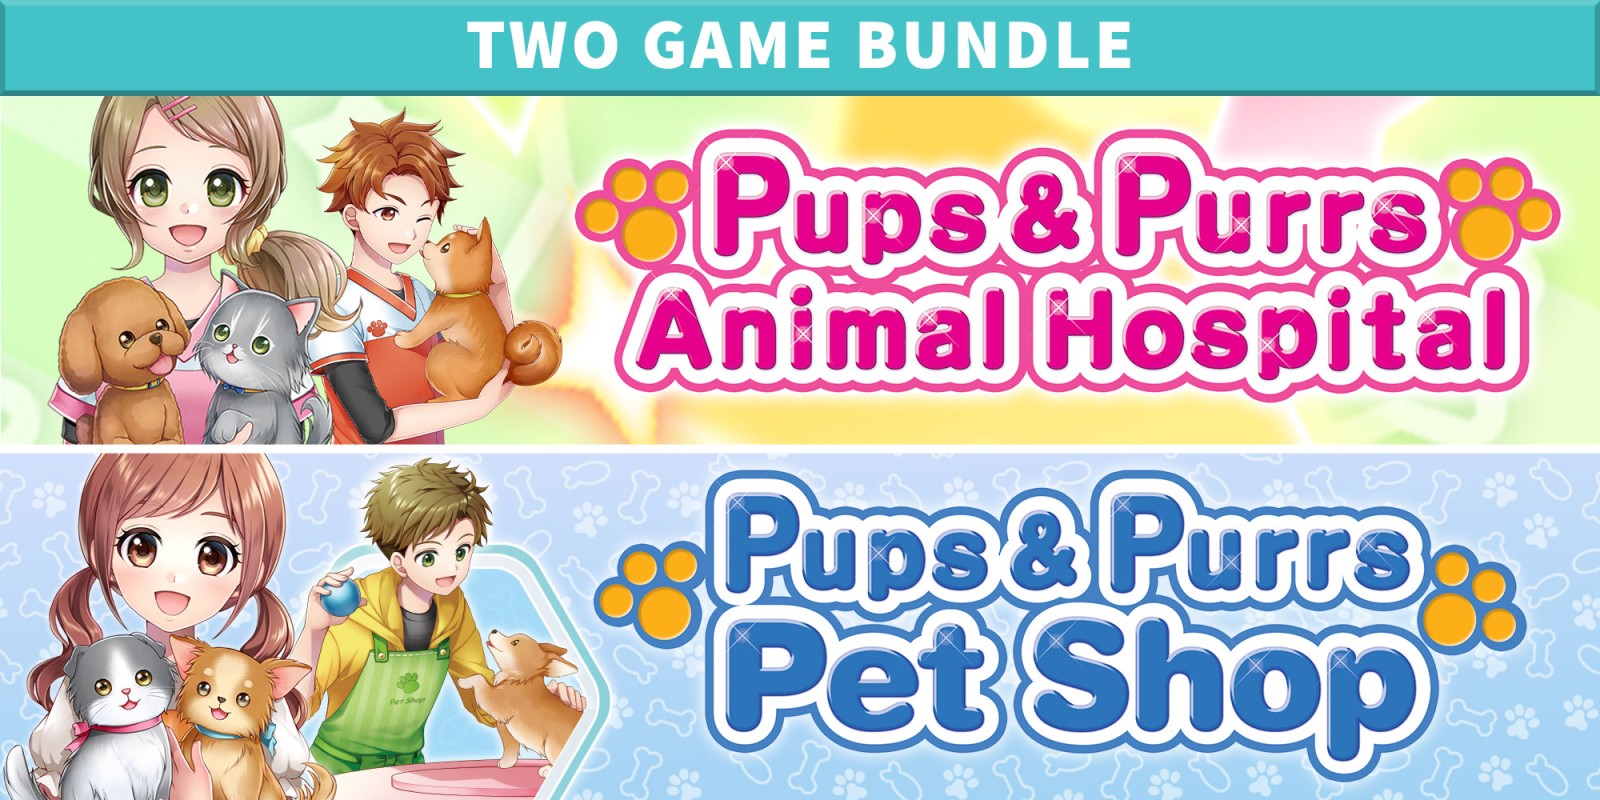 Pups & Purrs Animal Hospital and Pups & Purrs Pet Shop Bundle